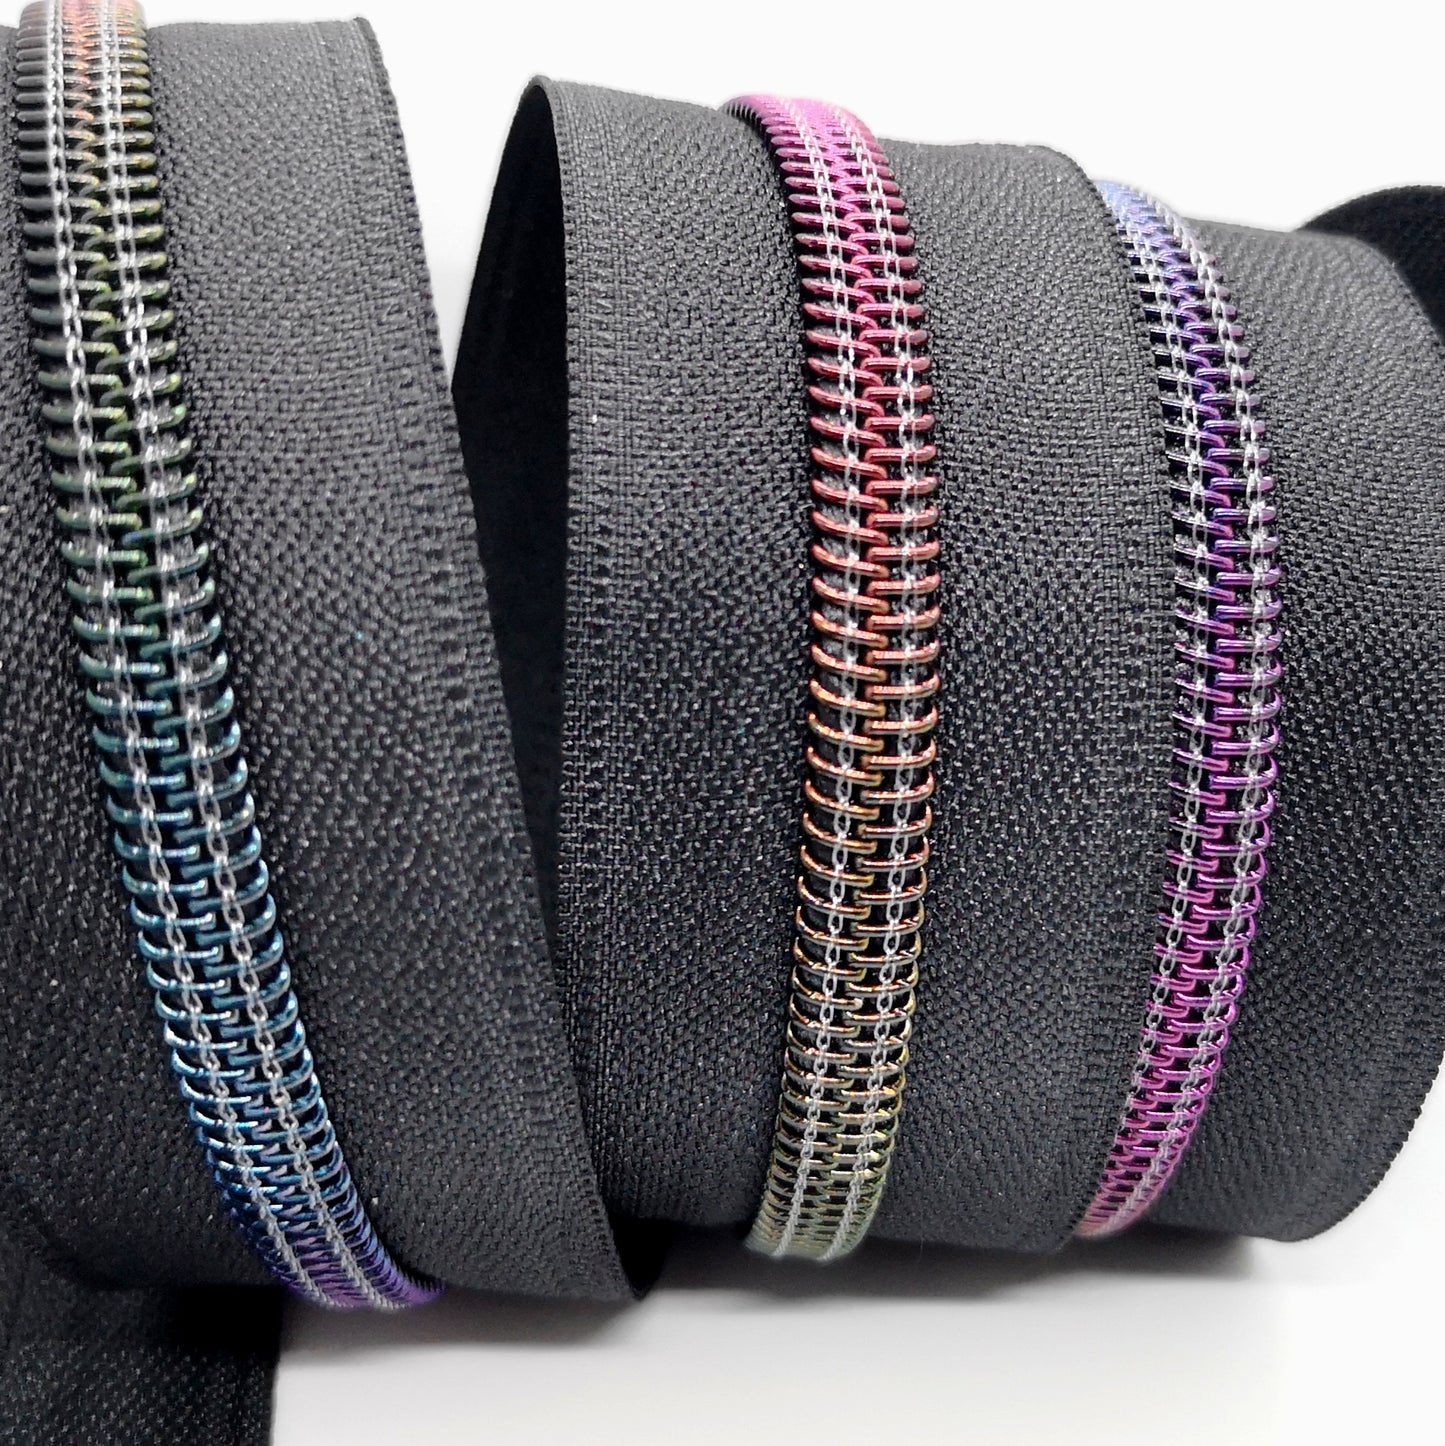 Dark Rainbow gradient on Black Zipper Tape